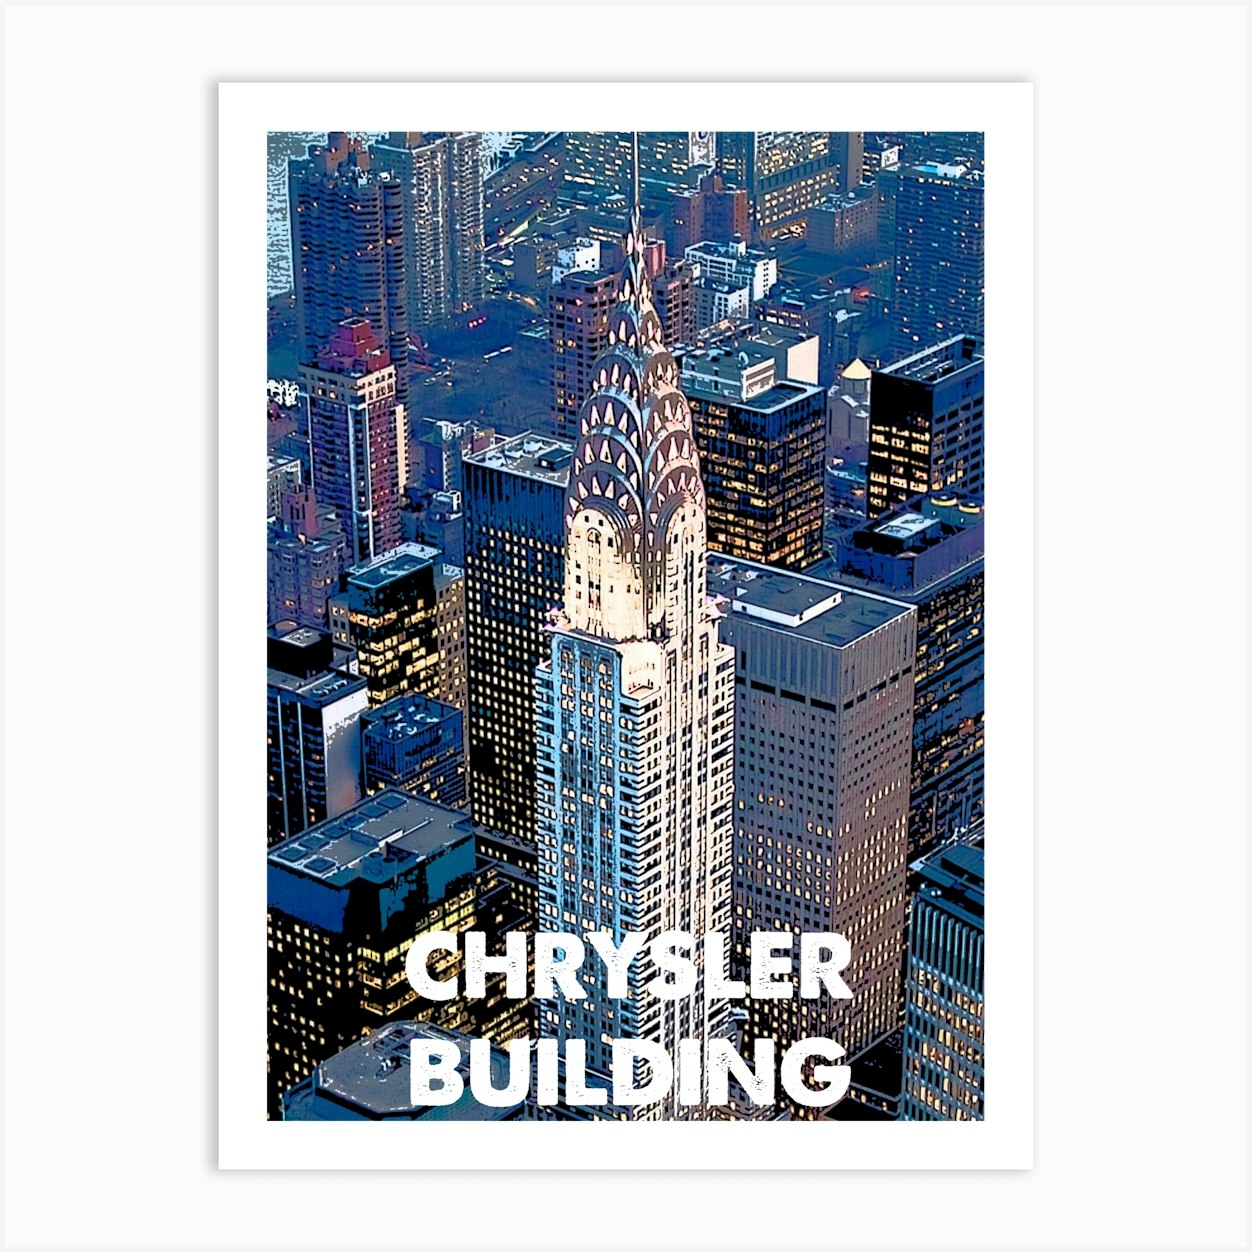 Chrysler Building, New York, Fy Landmark, Print, Poster, Print Art, by Wall PrintDeco - Art Print, Wall